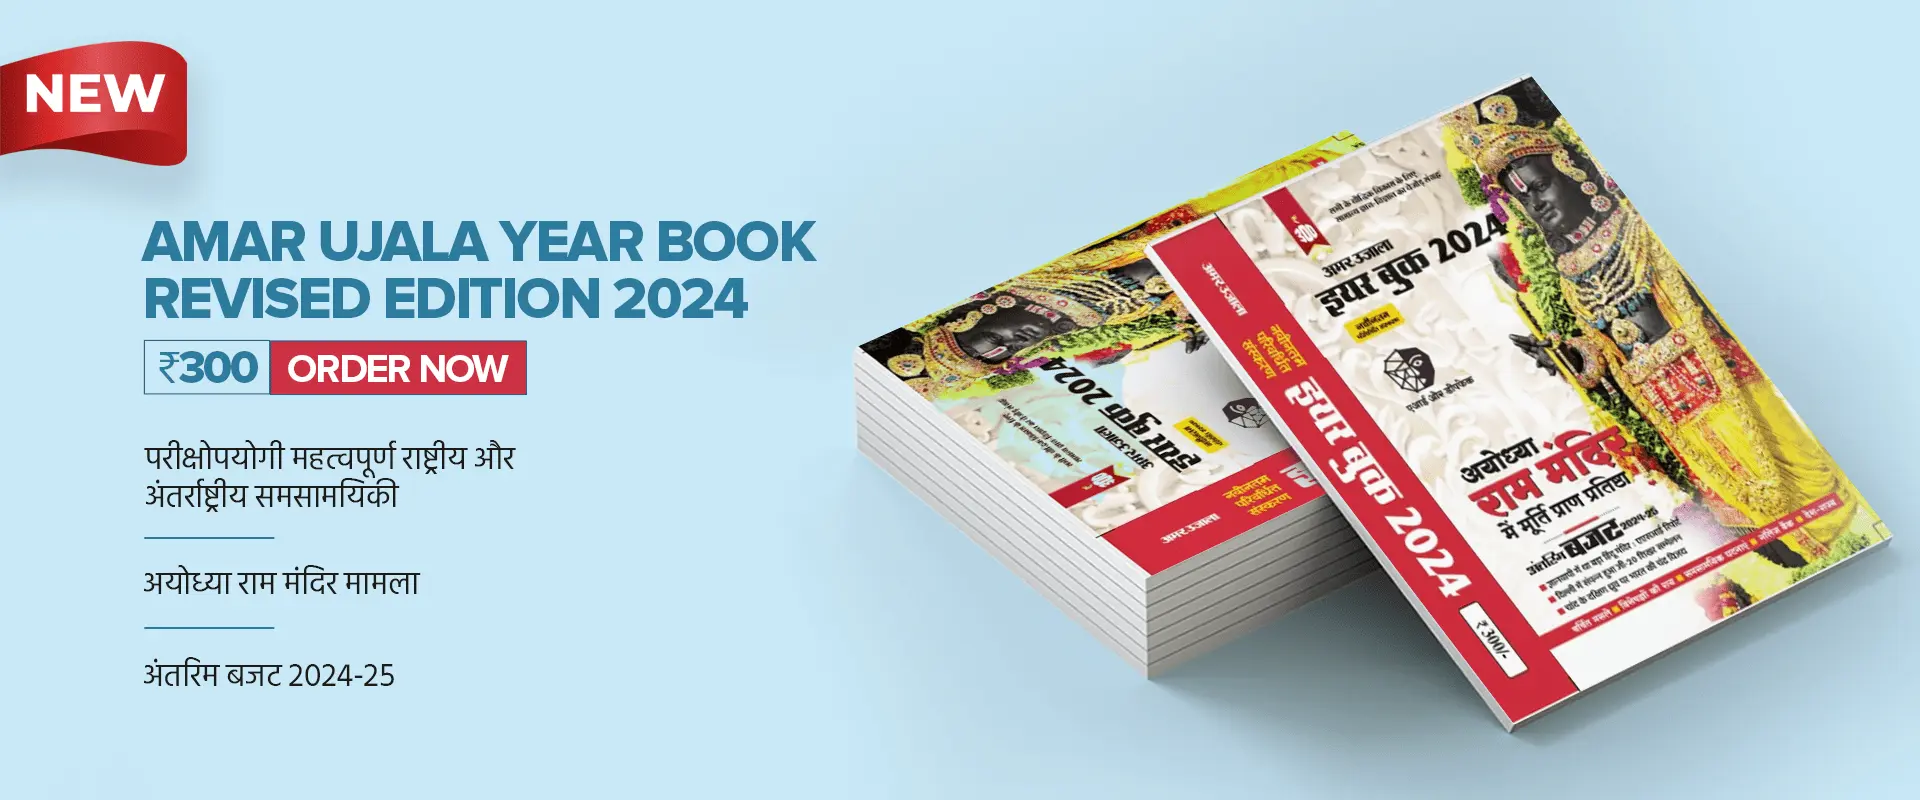 Amar ujala revised edition 2024